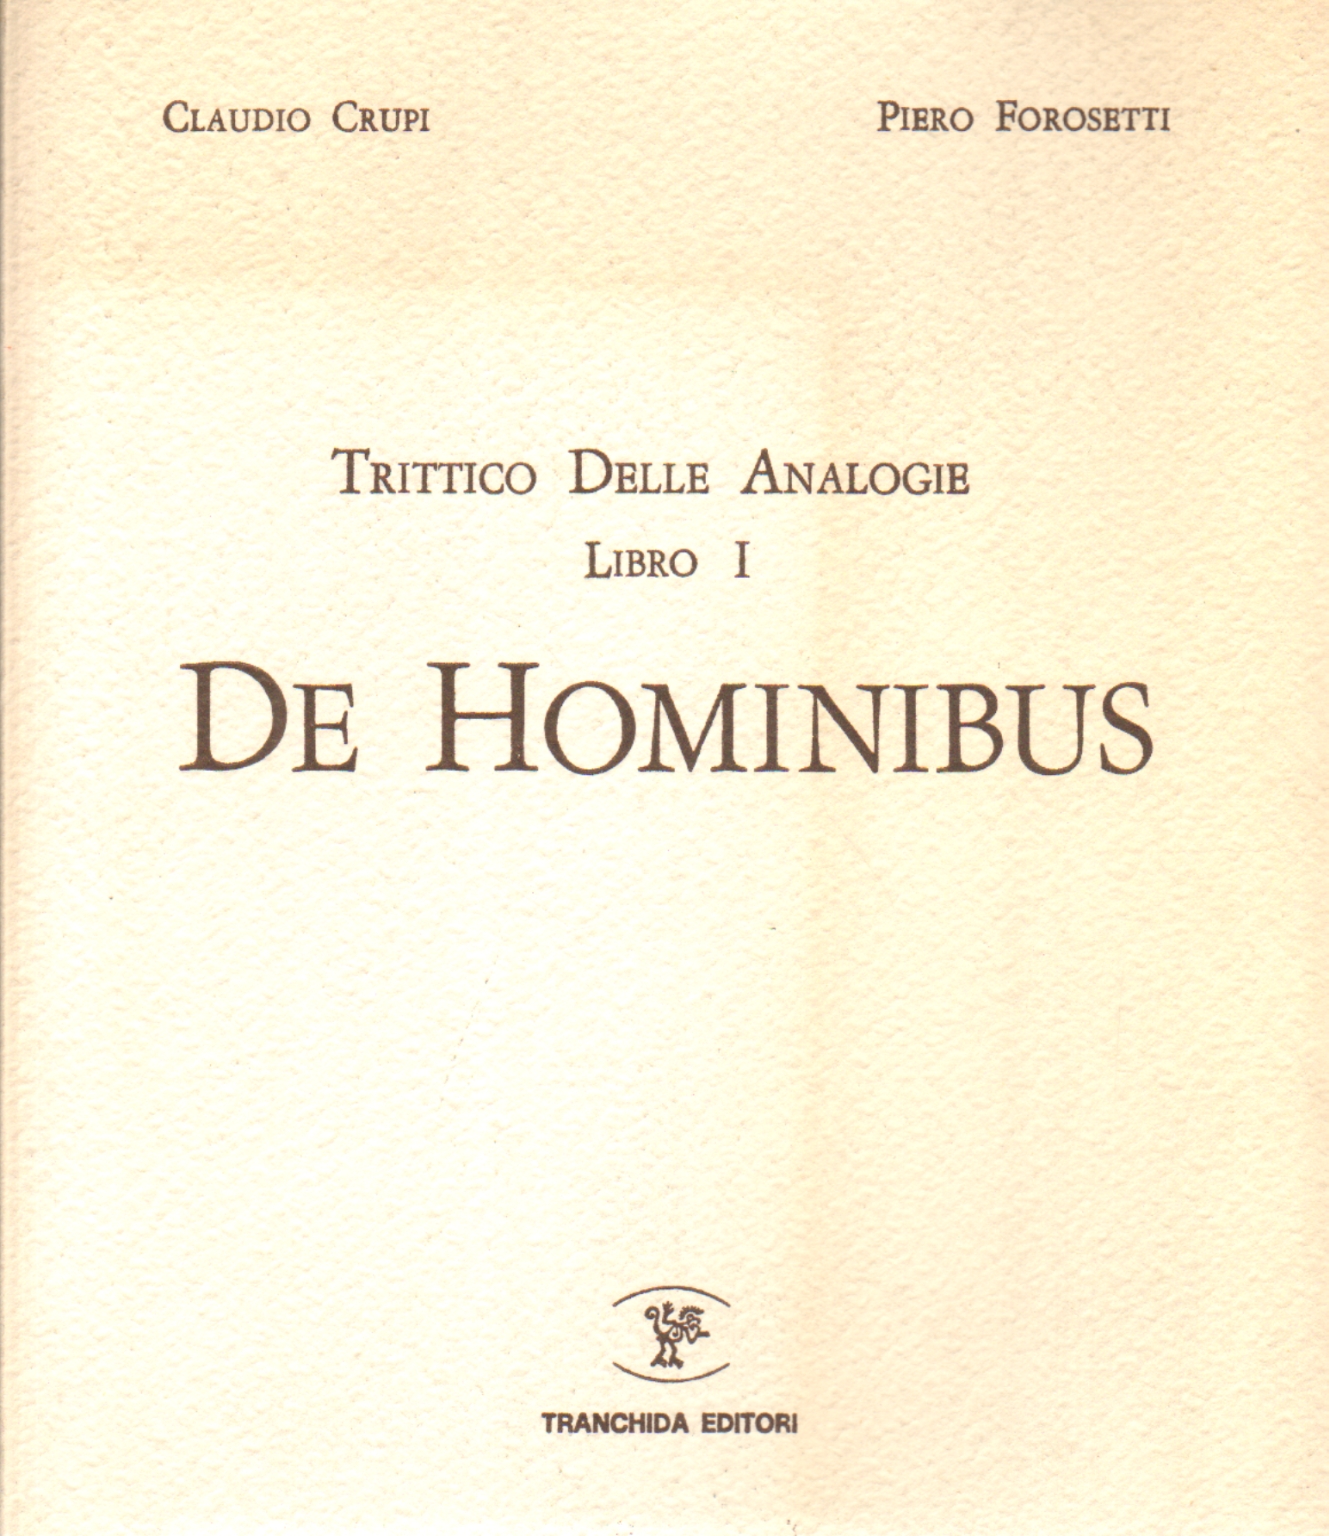 Tríptico de las similitudes libro, El: De Hominibus, Claudio Crupi Piero Forosetti